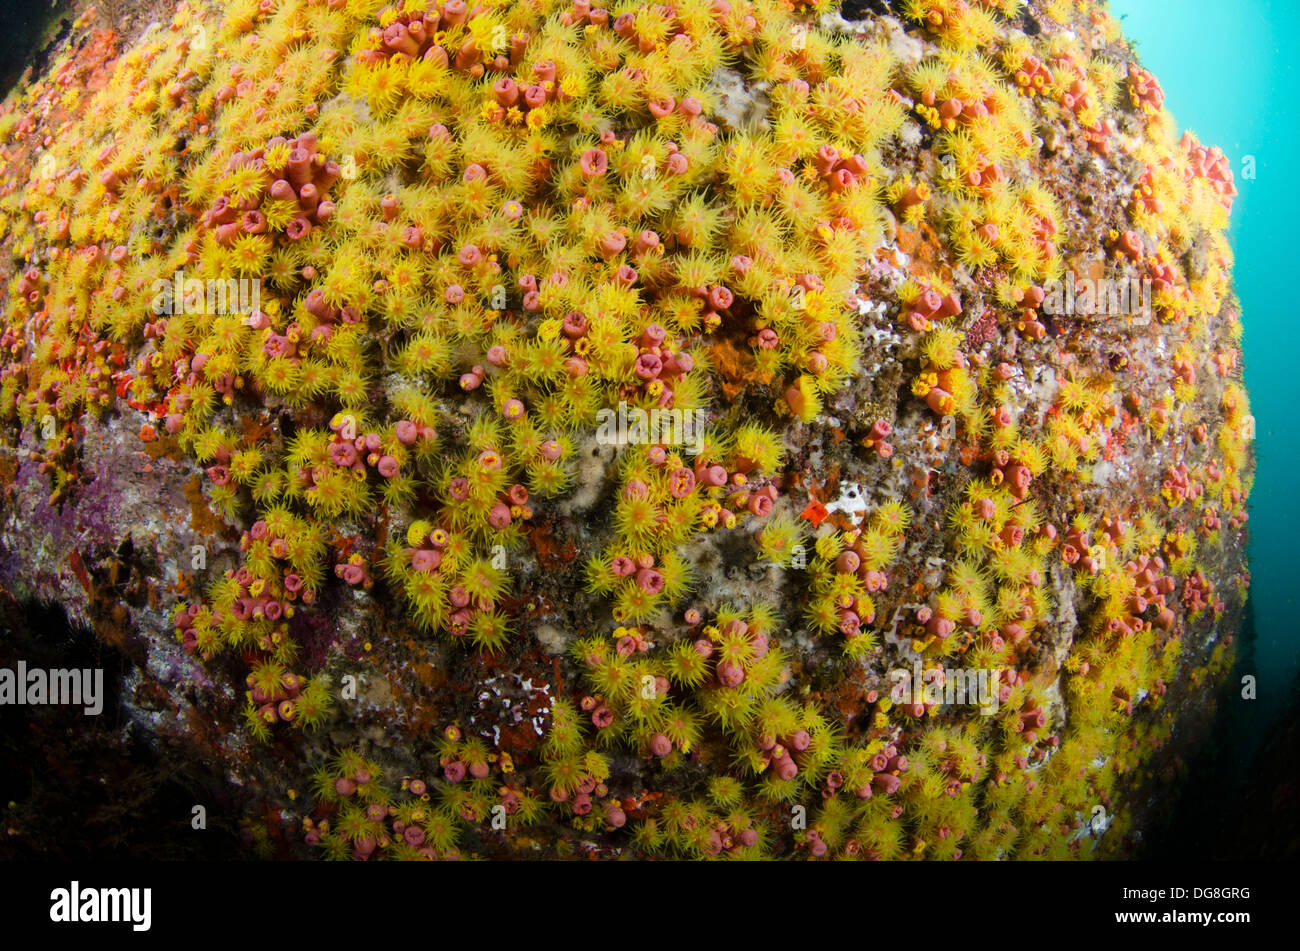 Sun Coral Tubastrea tagusensis invader coral at Buzios island, North shore of Sao Paulo state, Brazil Stock Photo